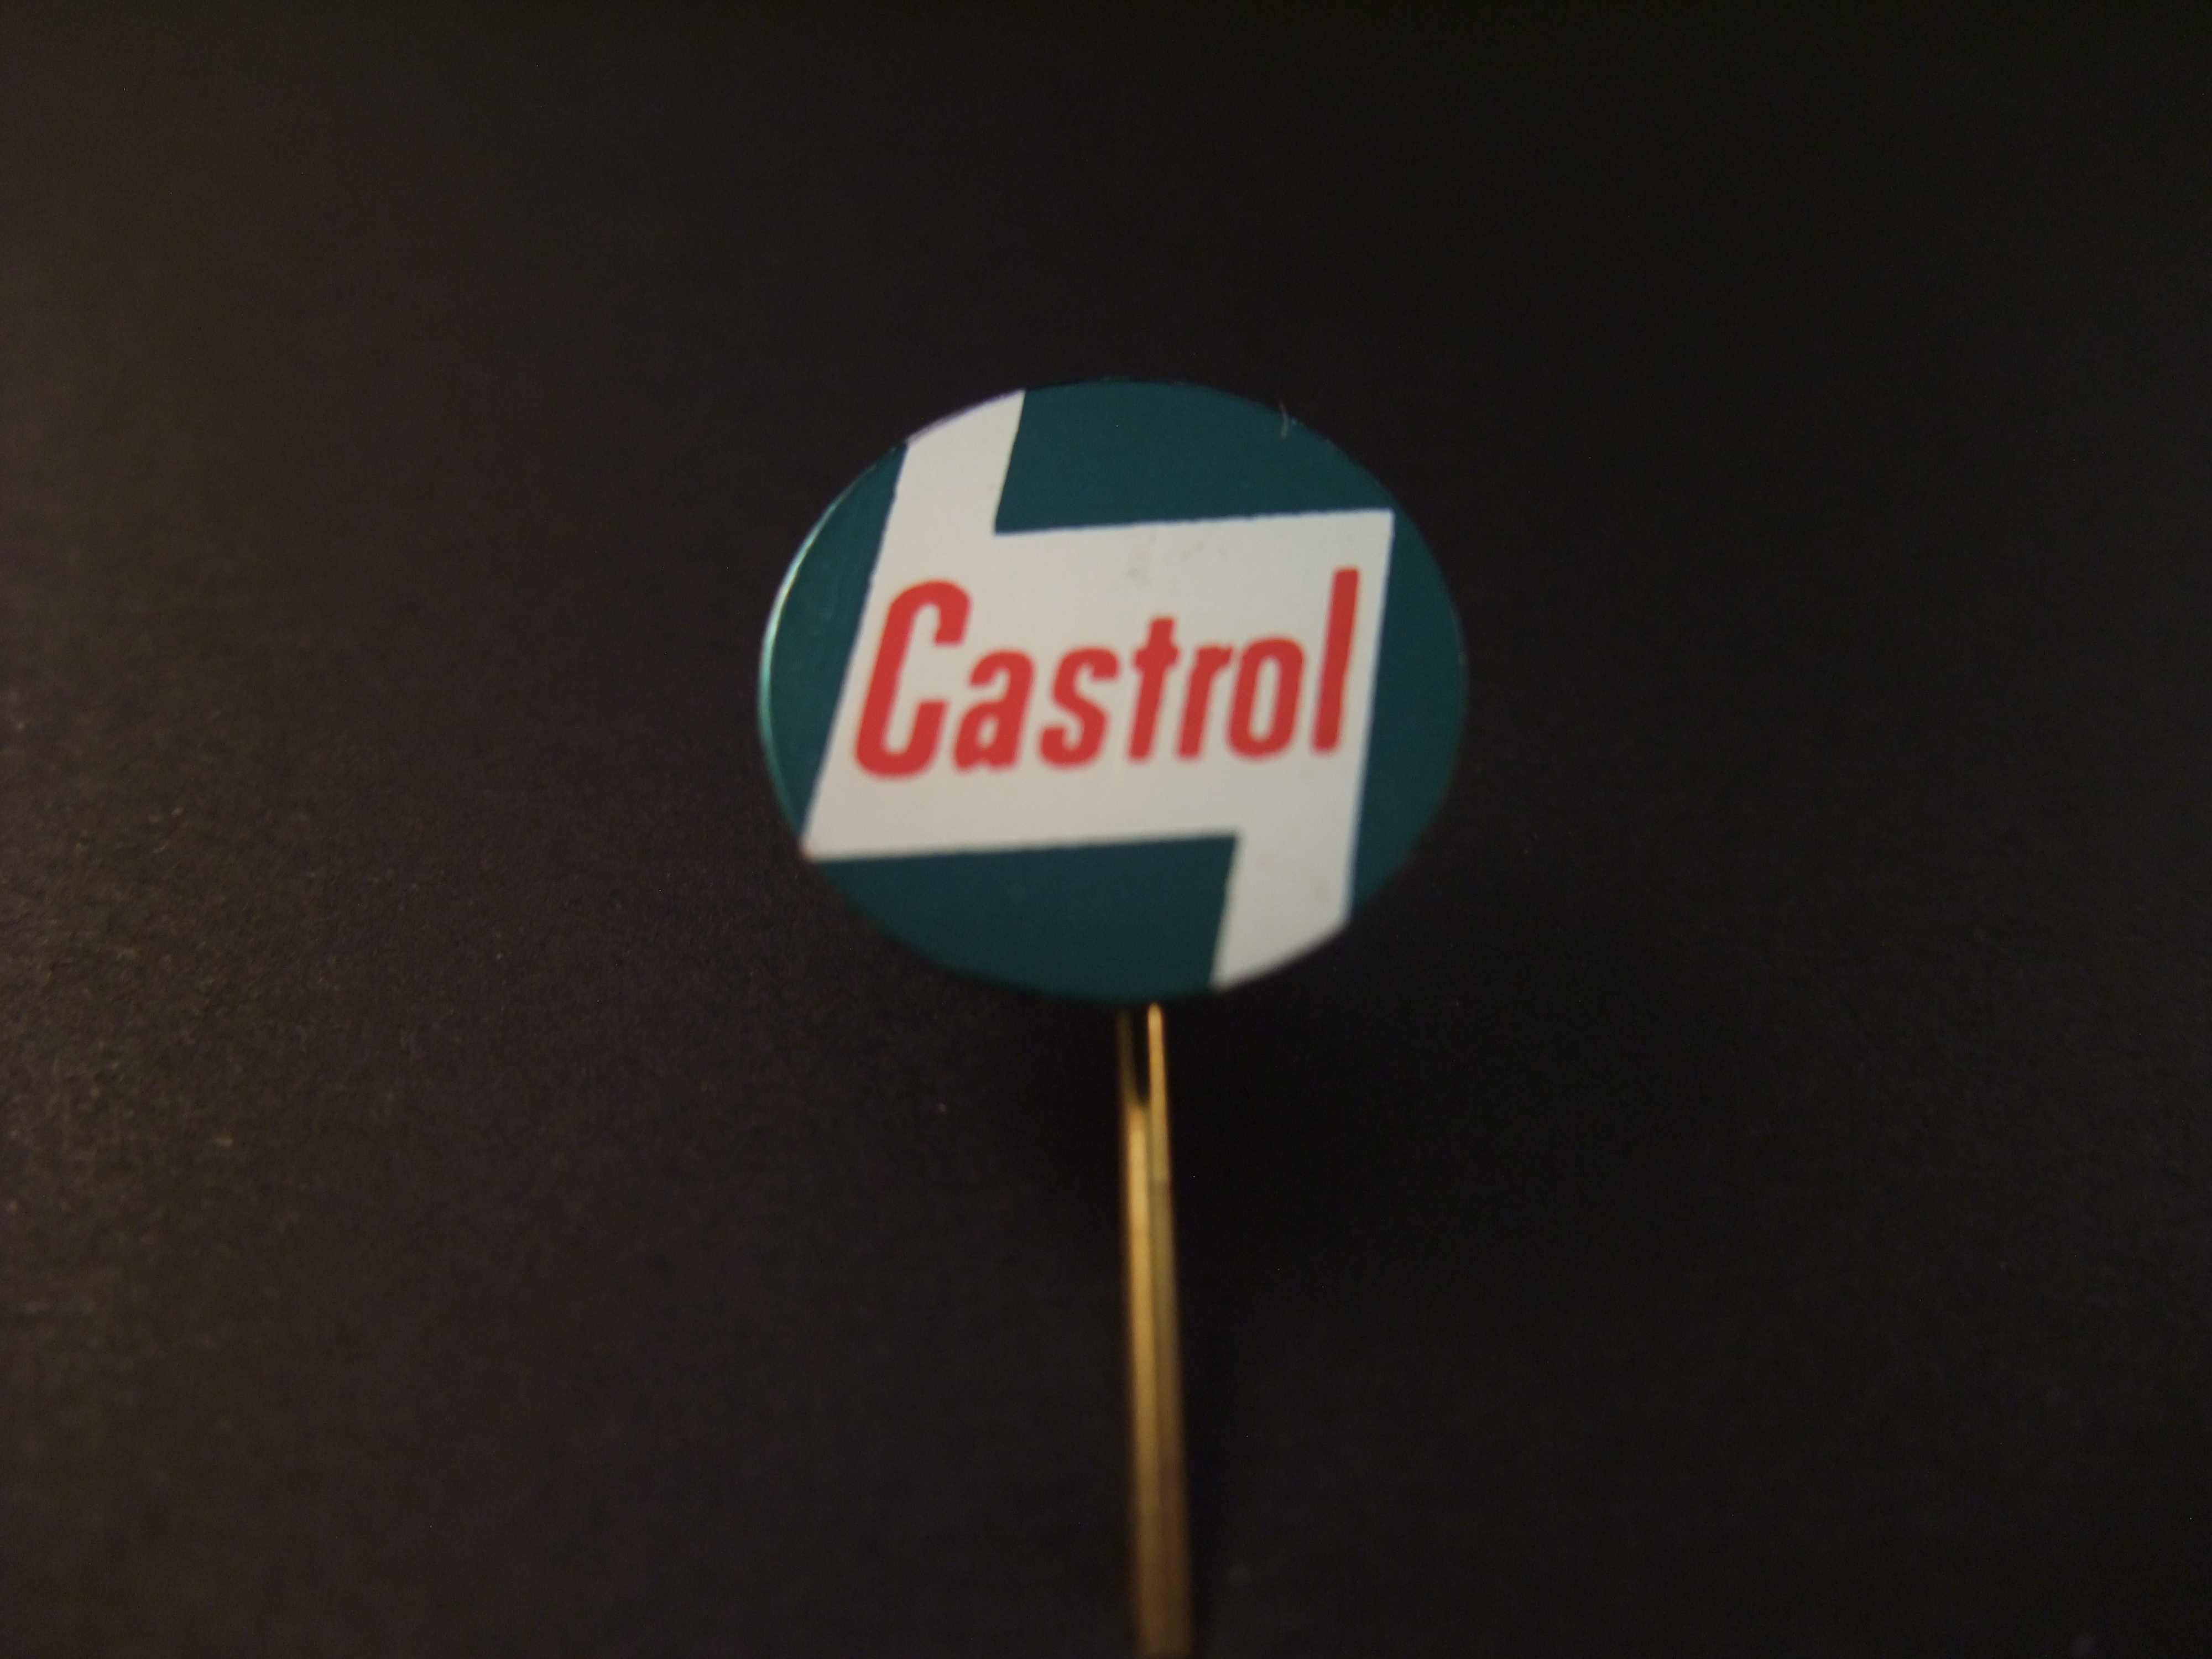 Castrol Brits merk motorolie (sponsor in de motorsport) logo